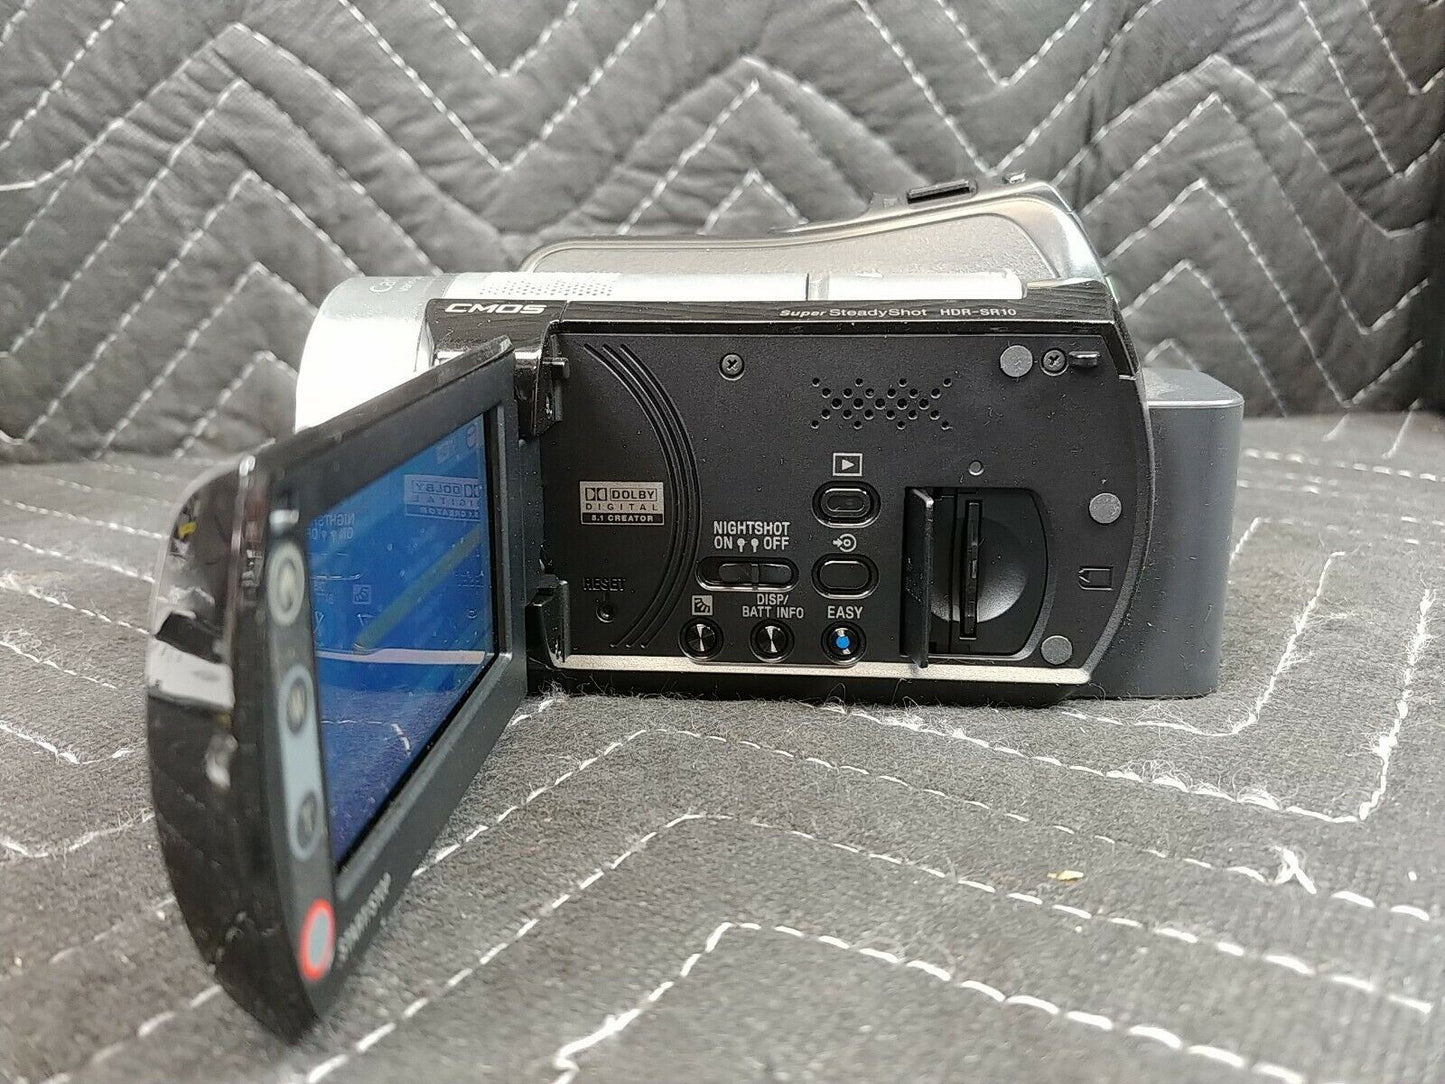 Sony HDR-SR10 Handycam Digital HD Video Camera Recorder